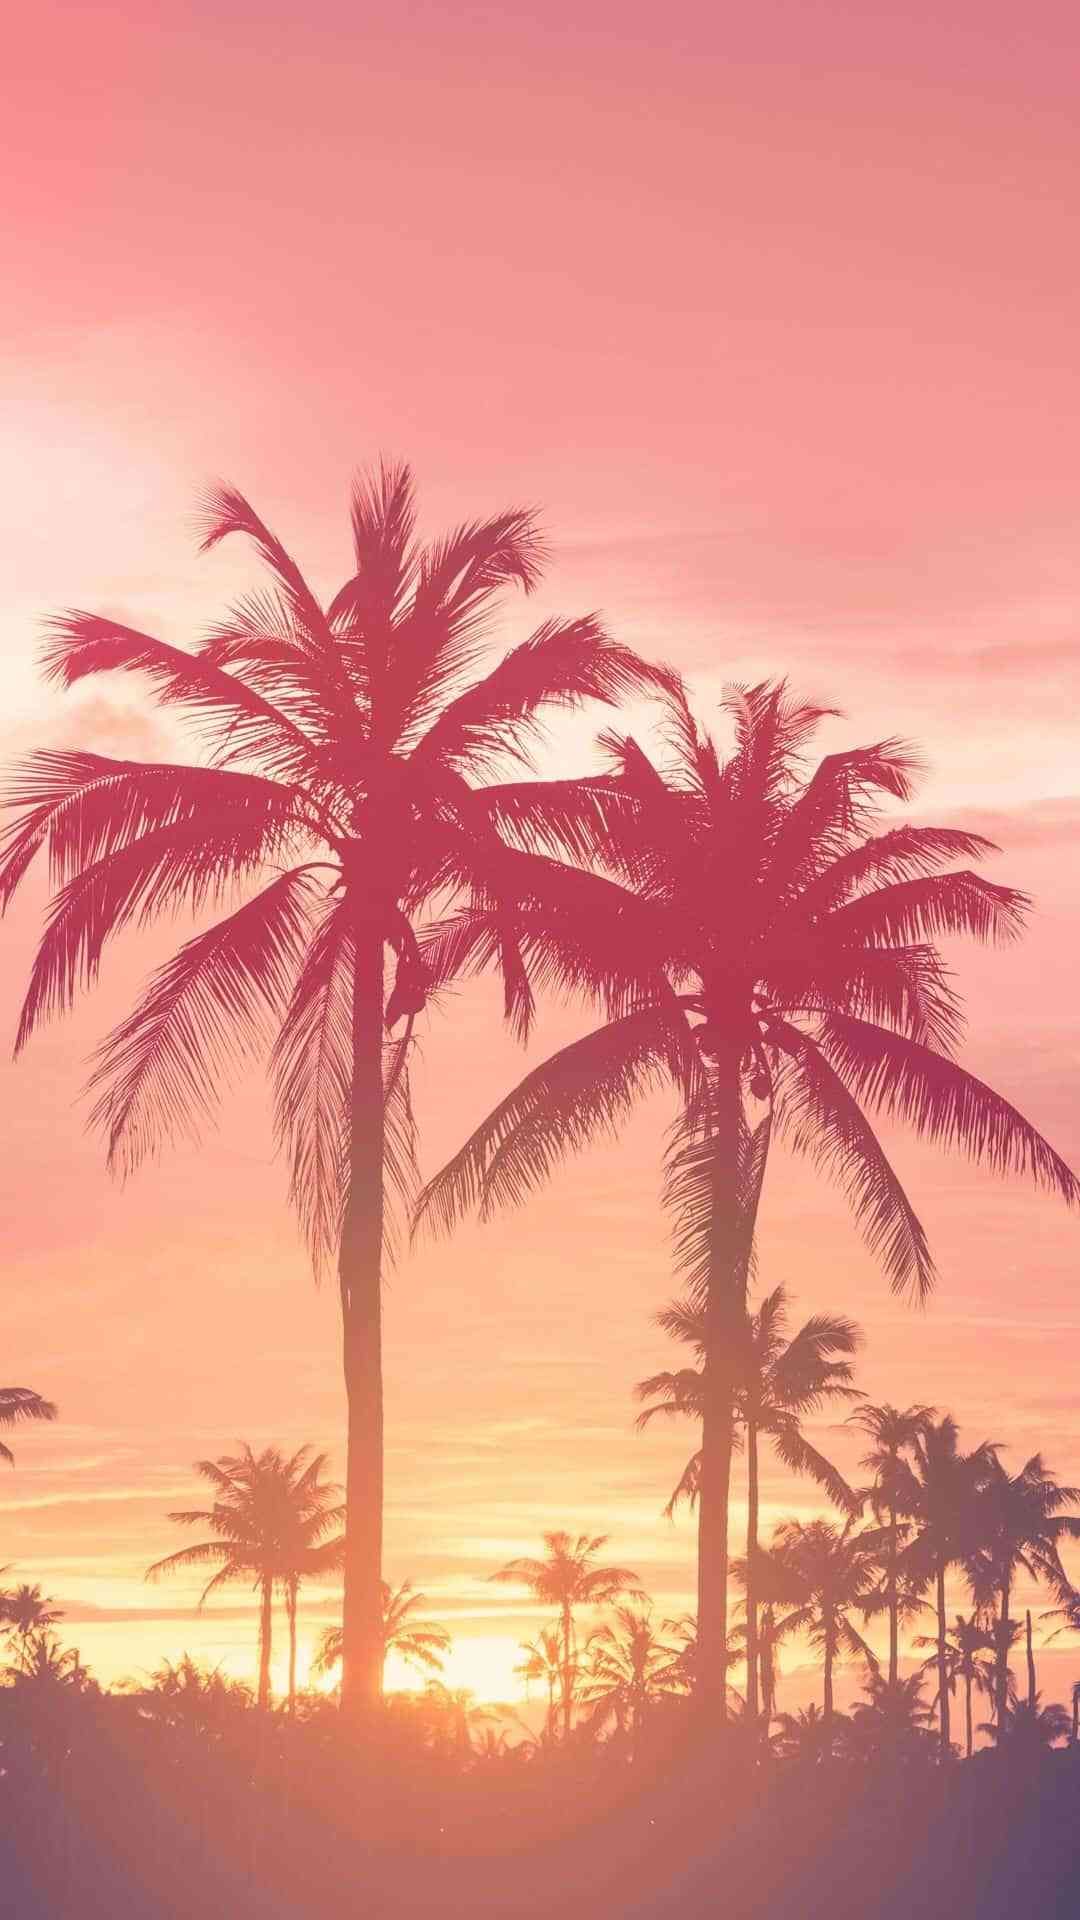  Landschaften Hintergrundbild 1080x1920. Summer iPhone Wallpaper that you have to see. Sunset wallpaper, Landscape wallpaper, Summer wallpaper